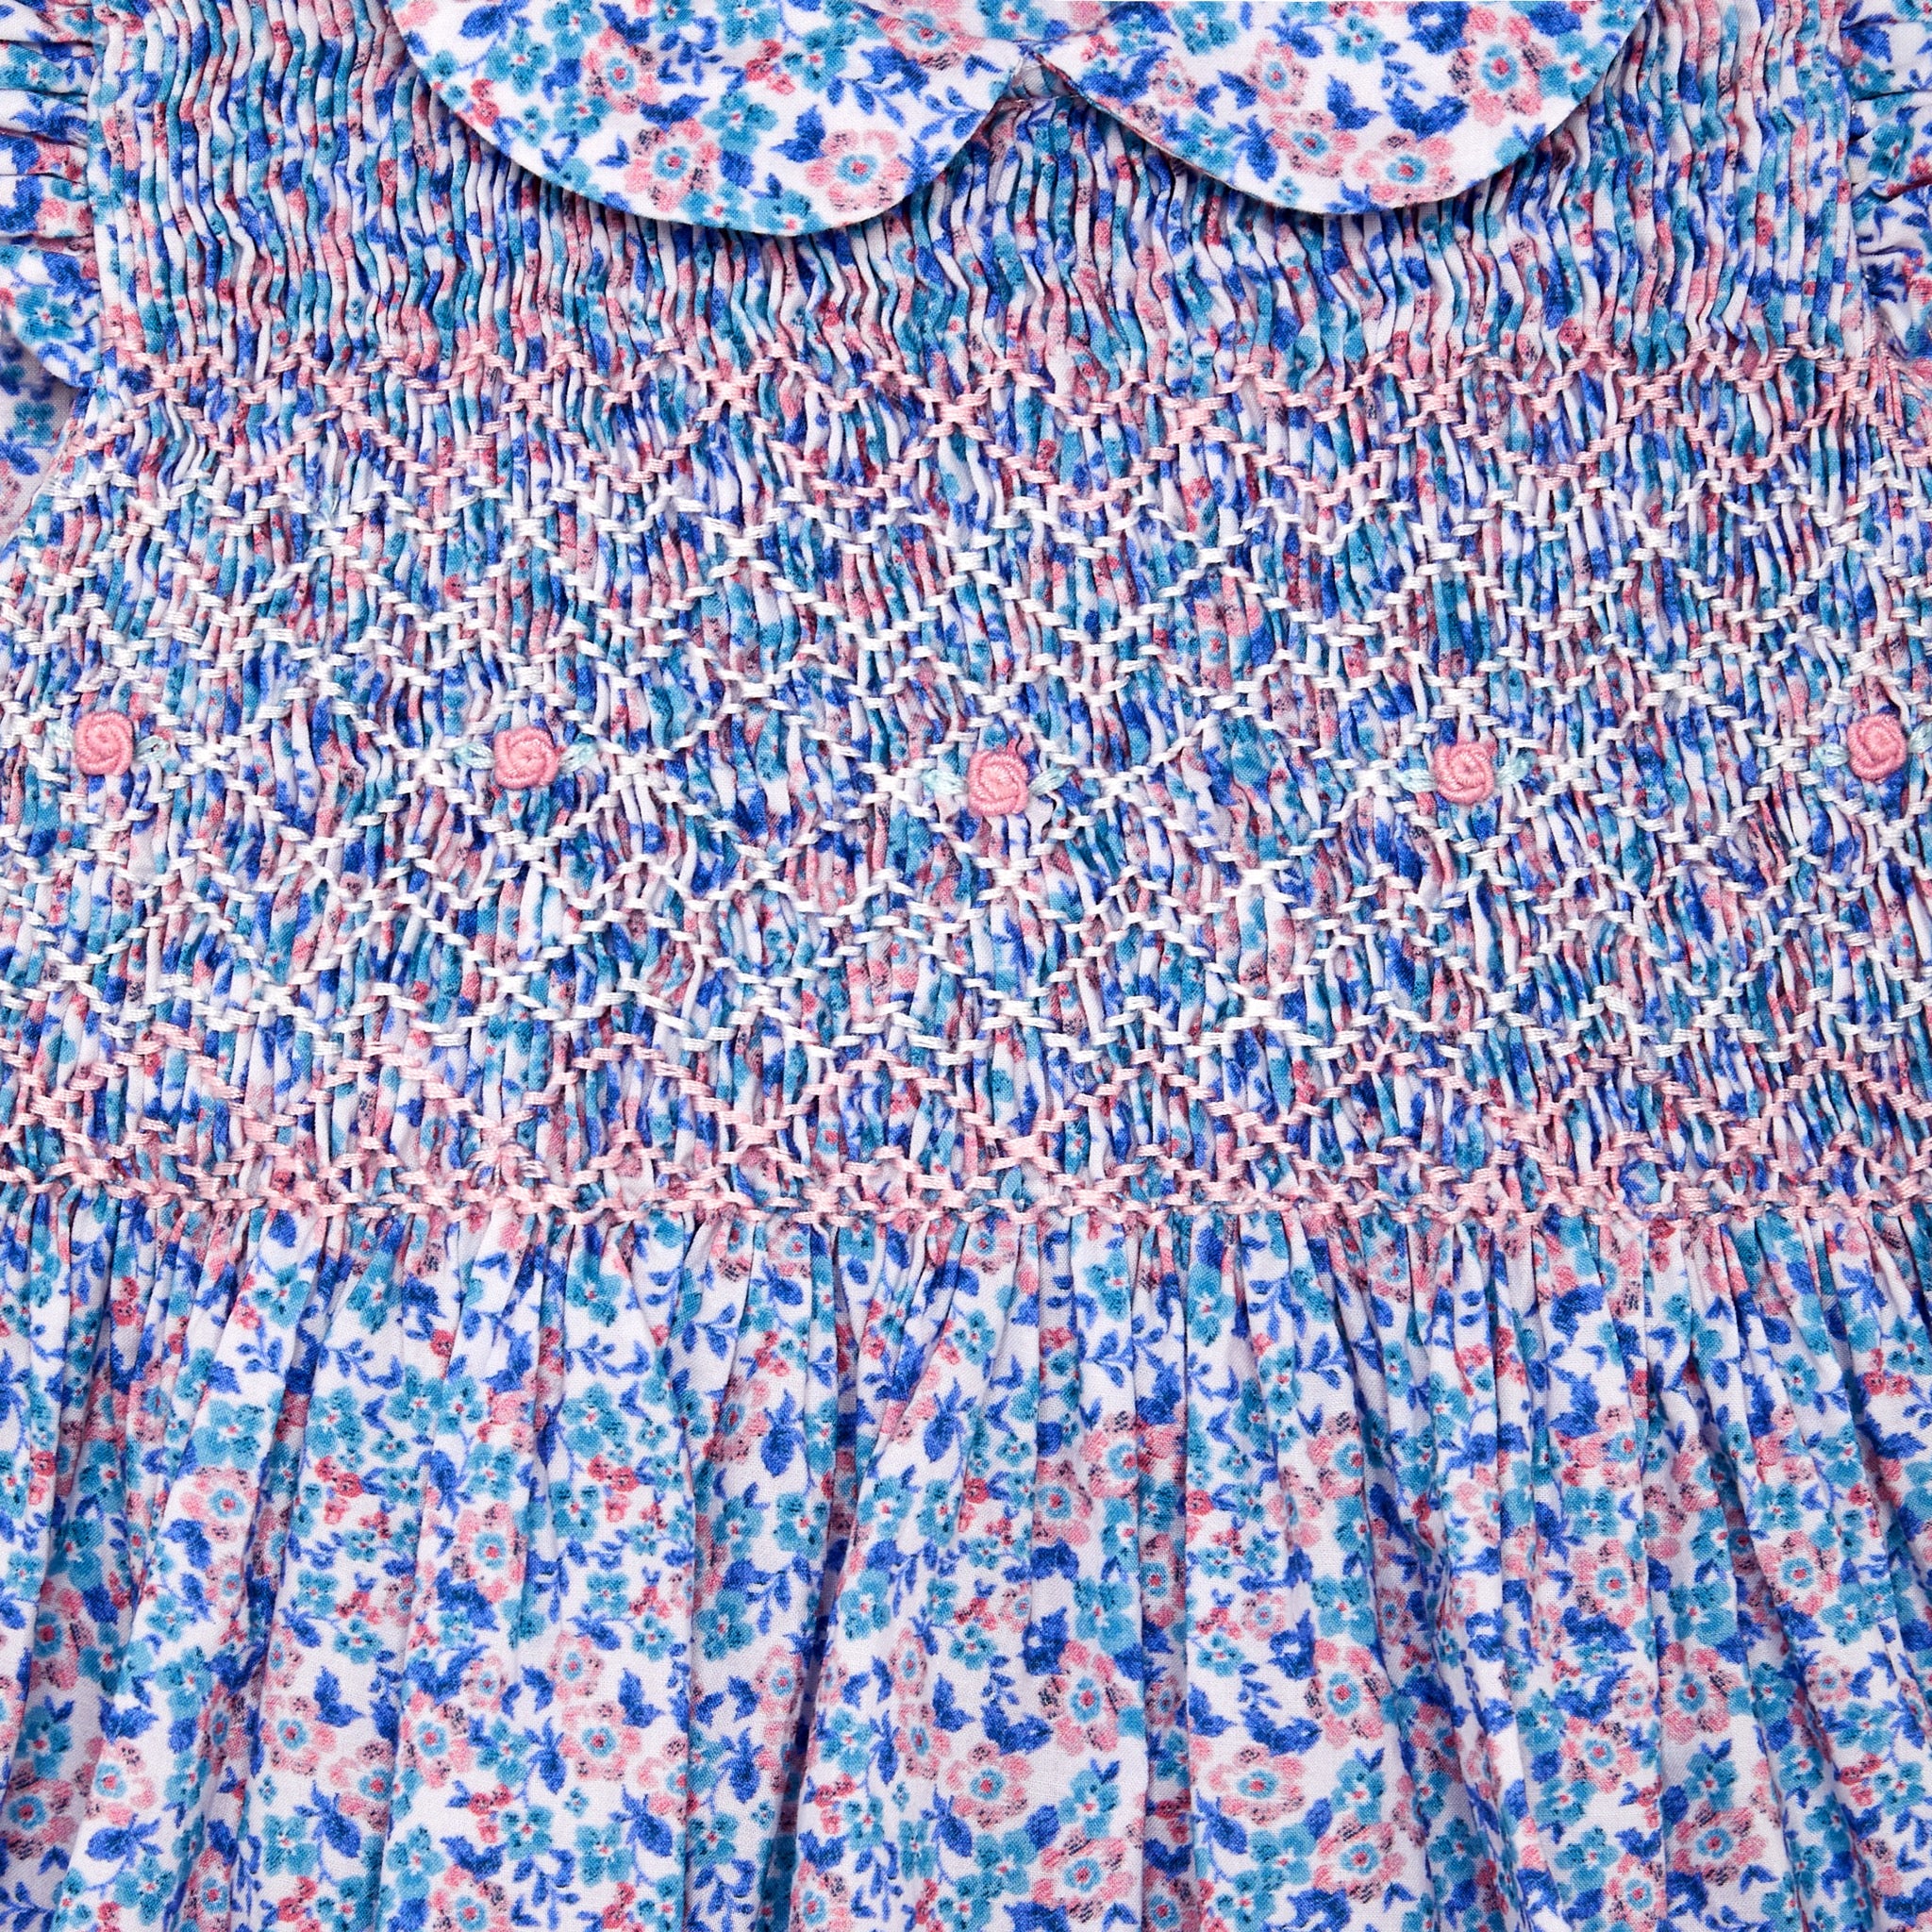 sleeveless blue floral baby dress, hand-smocked, sleeveless blue floral baby dress, hand-smocked, detail shot